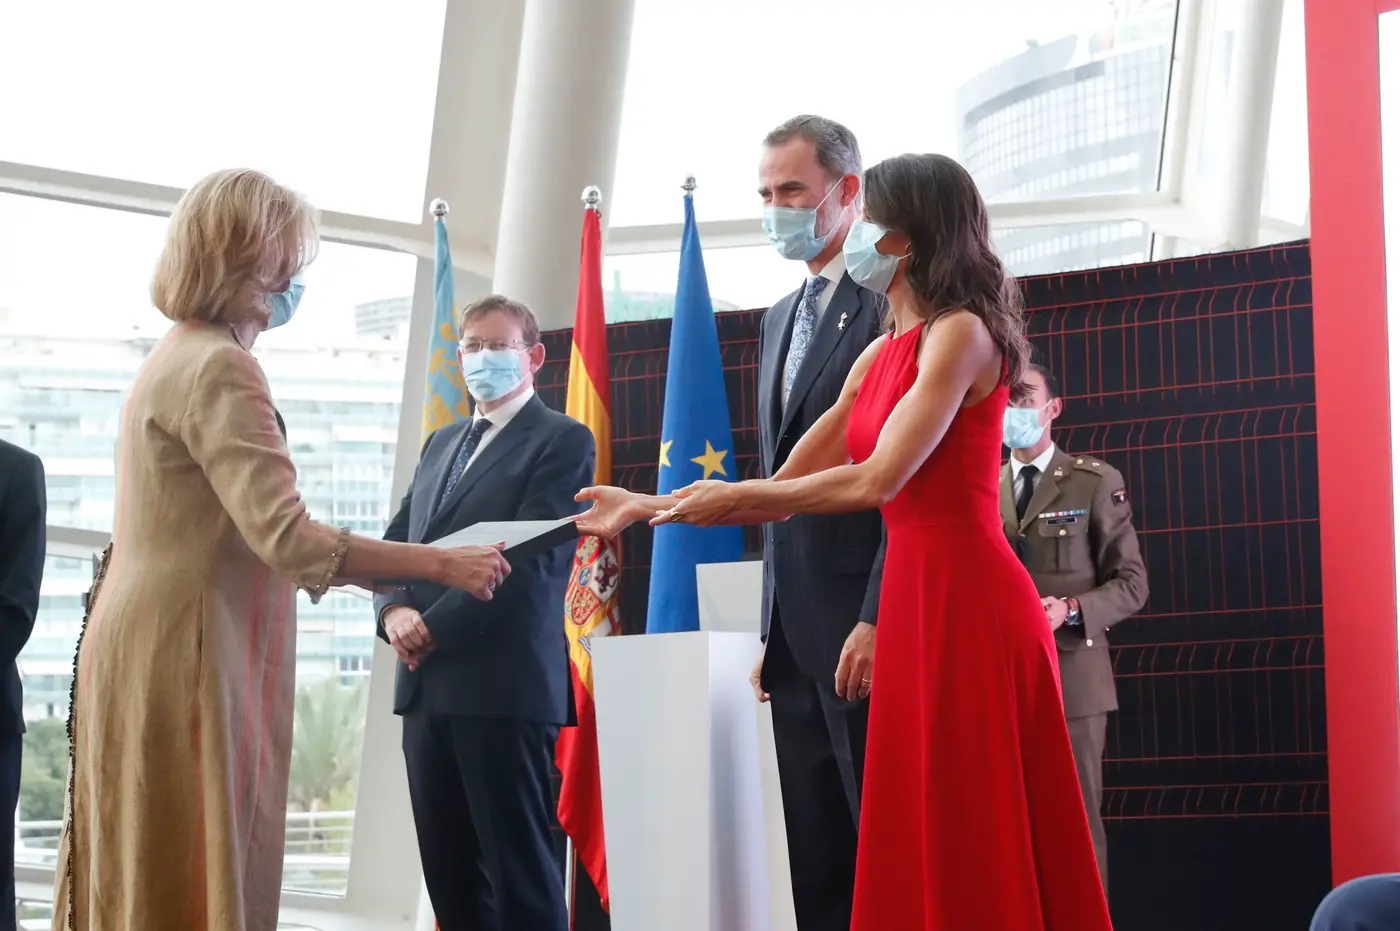 Queen Letizia presenting the awards